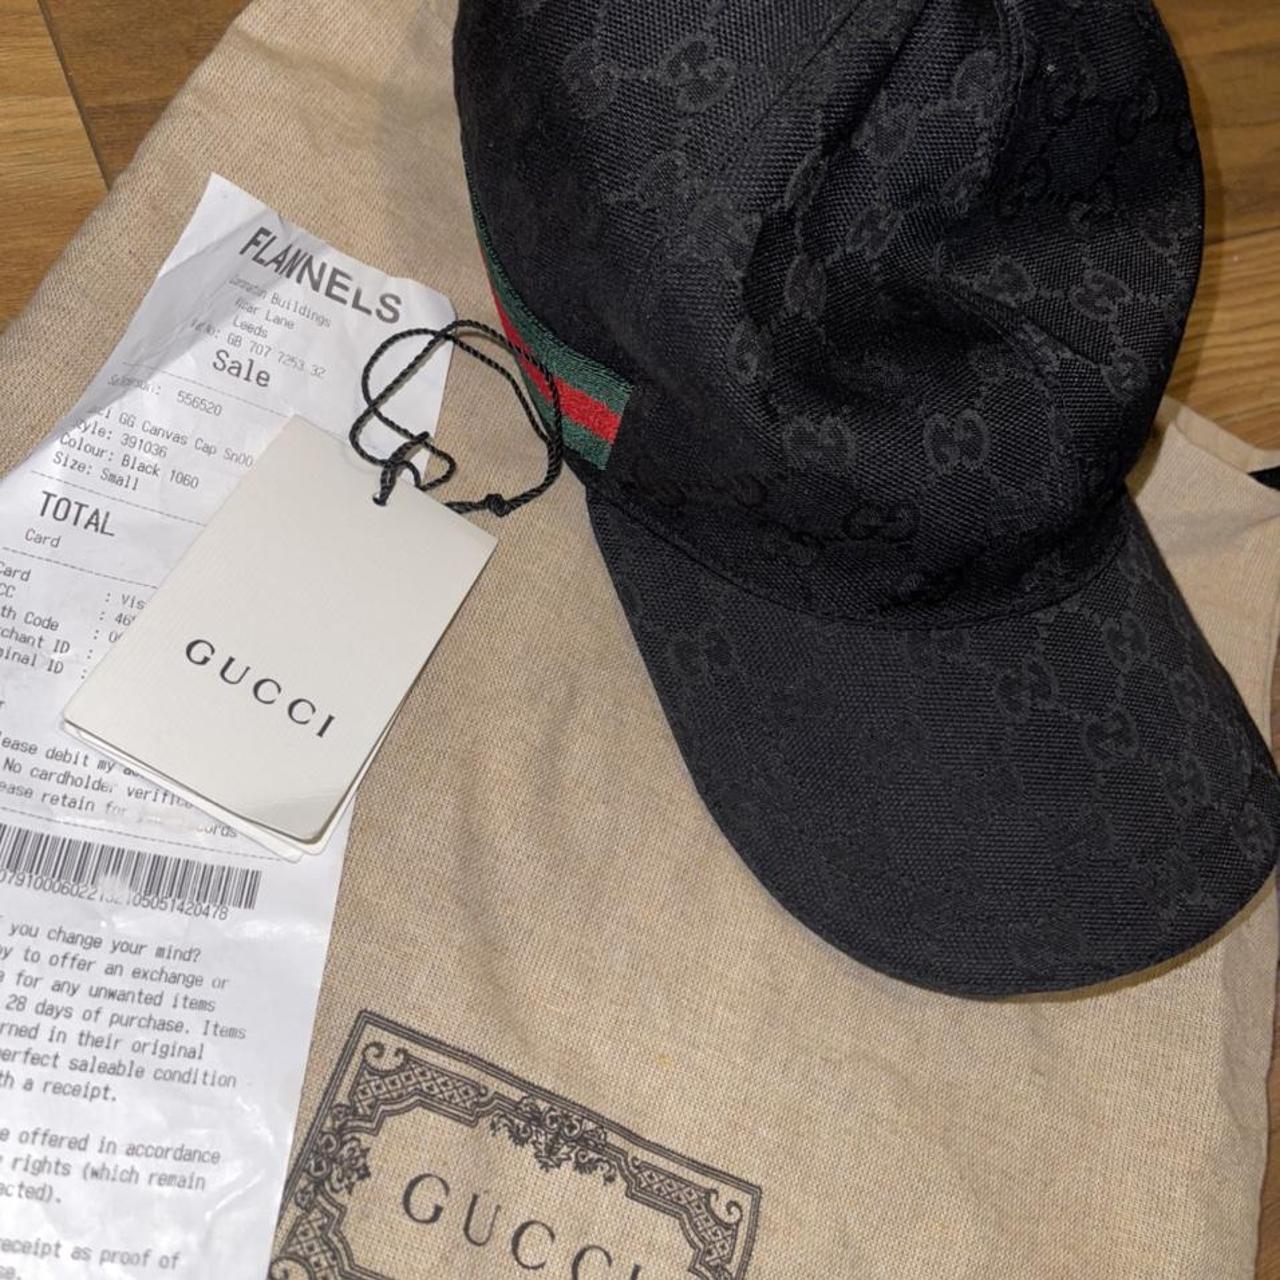 Gucci Original GG Canvas Baseball Hat